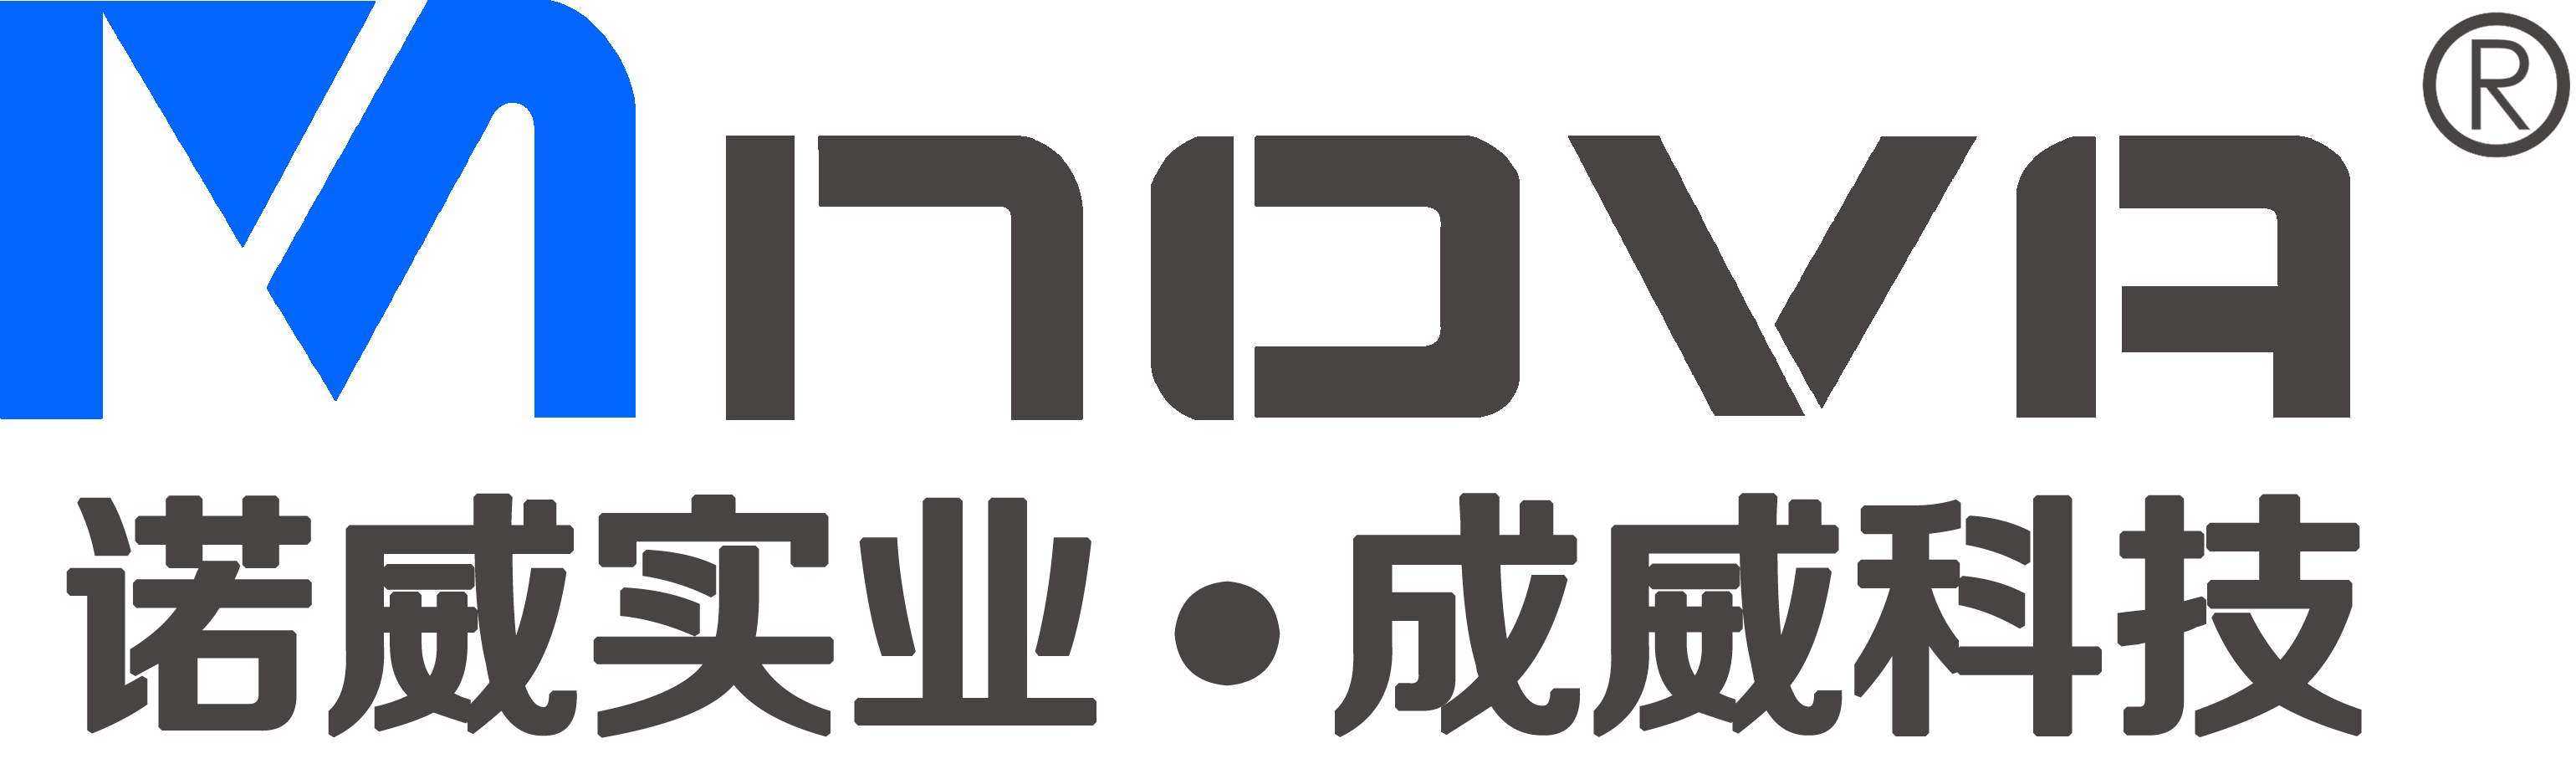 Mnova Industrial&ChengWei